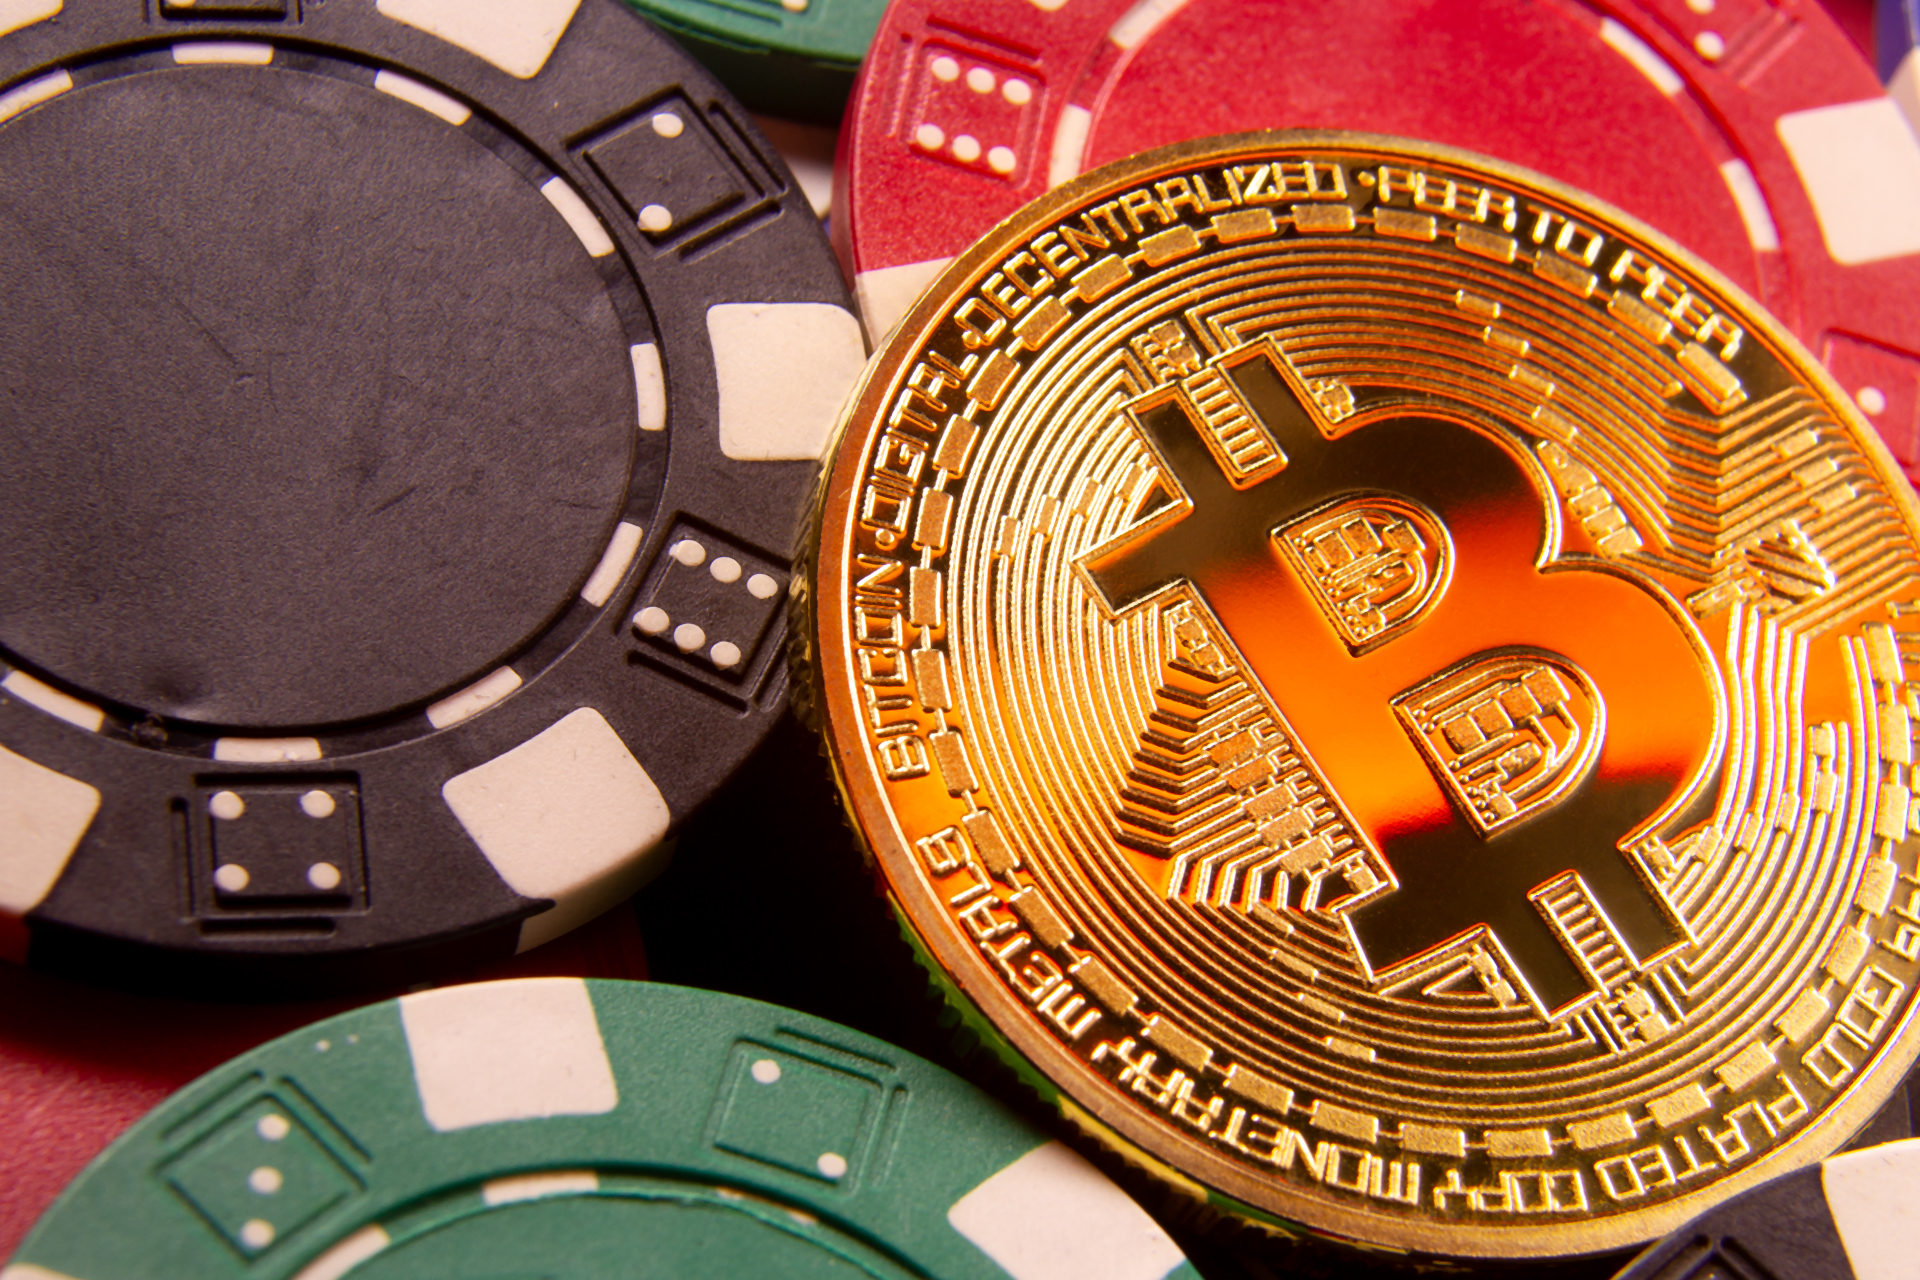 poker for bitcoins